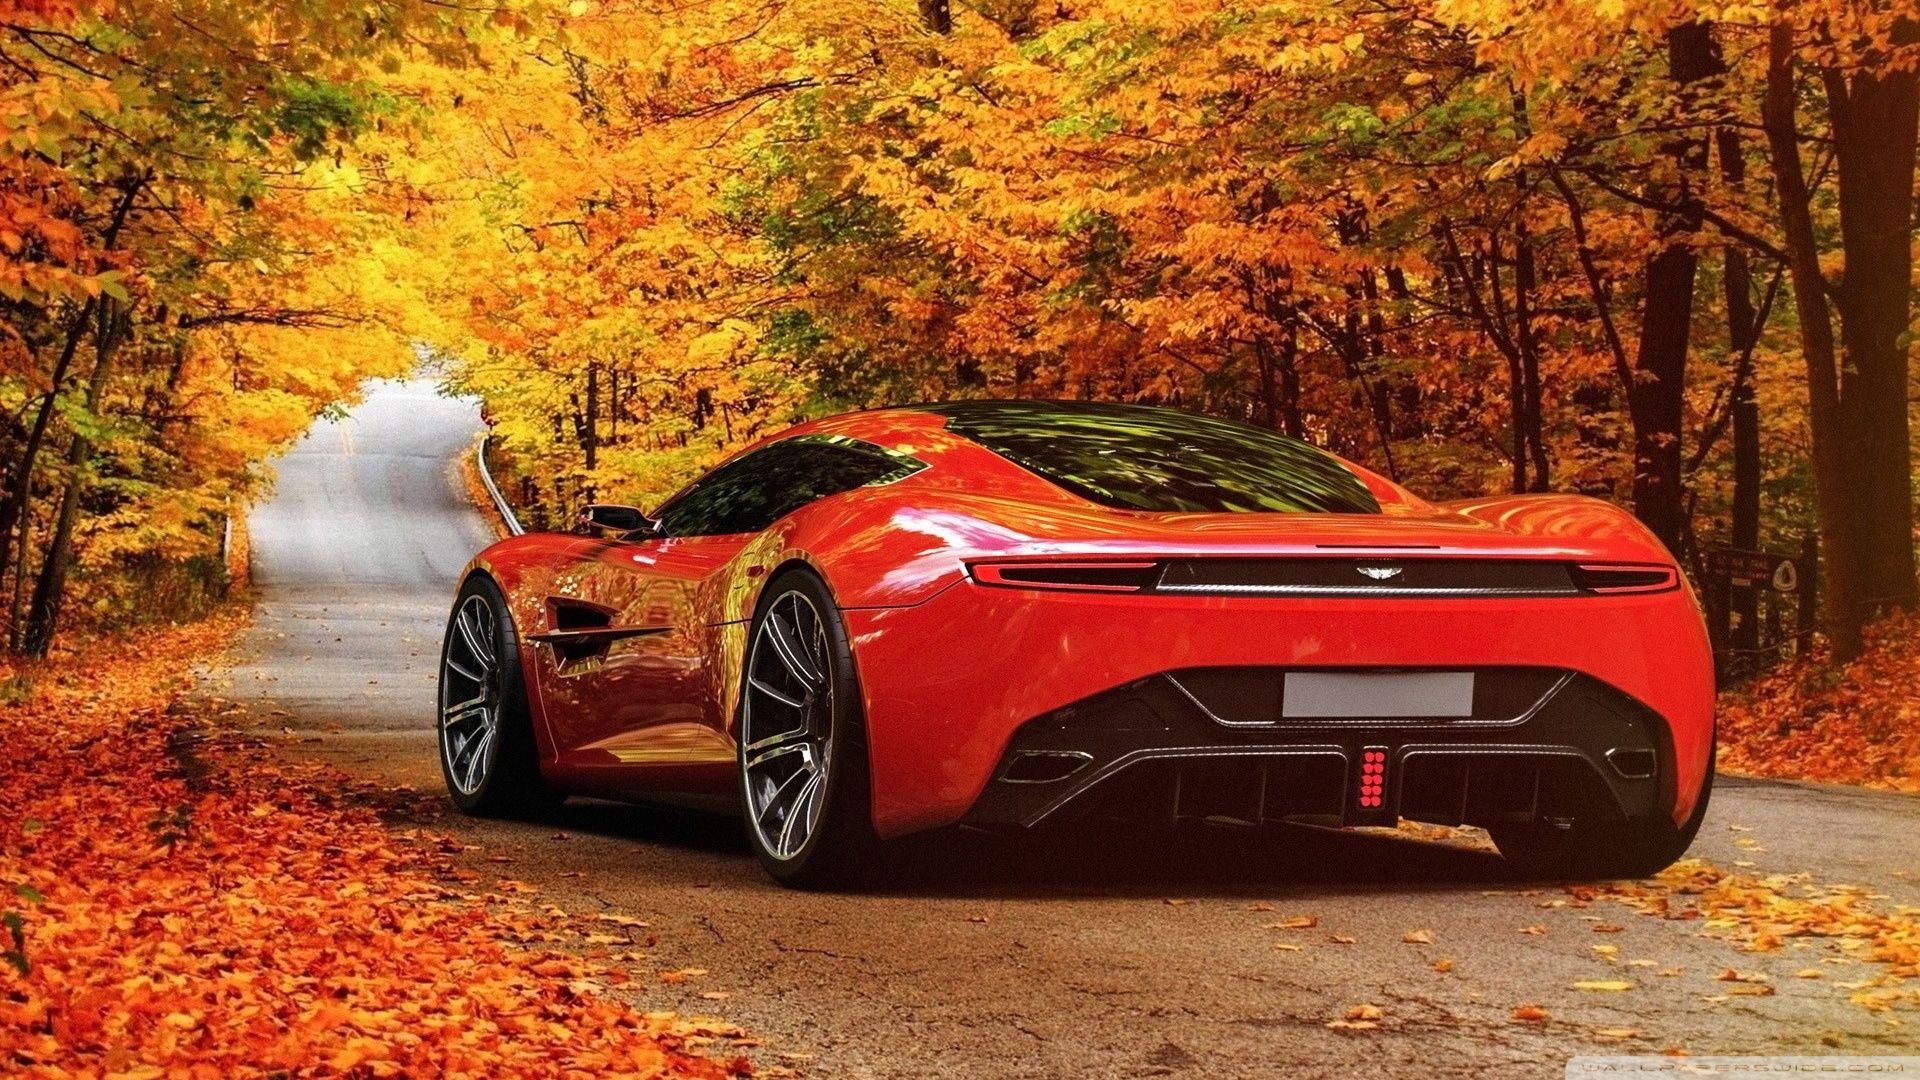 Aston Martin in red [Wallpaper]